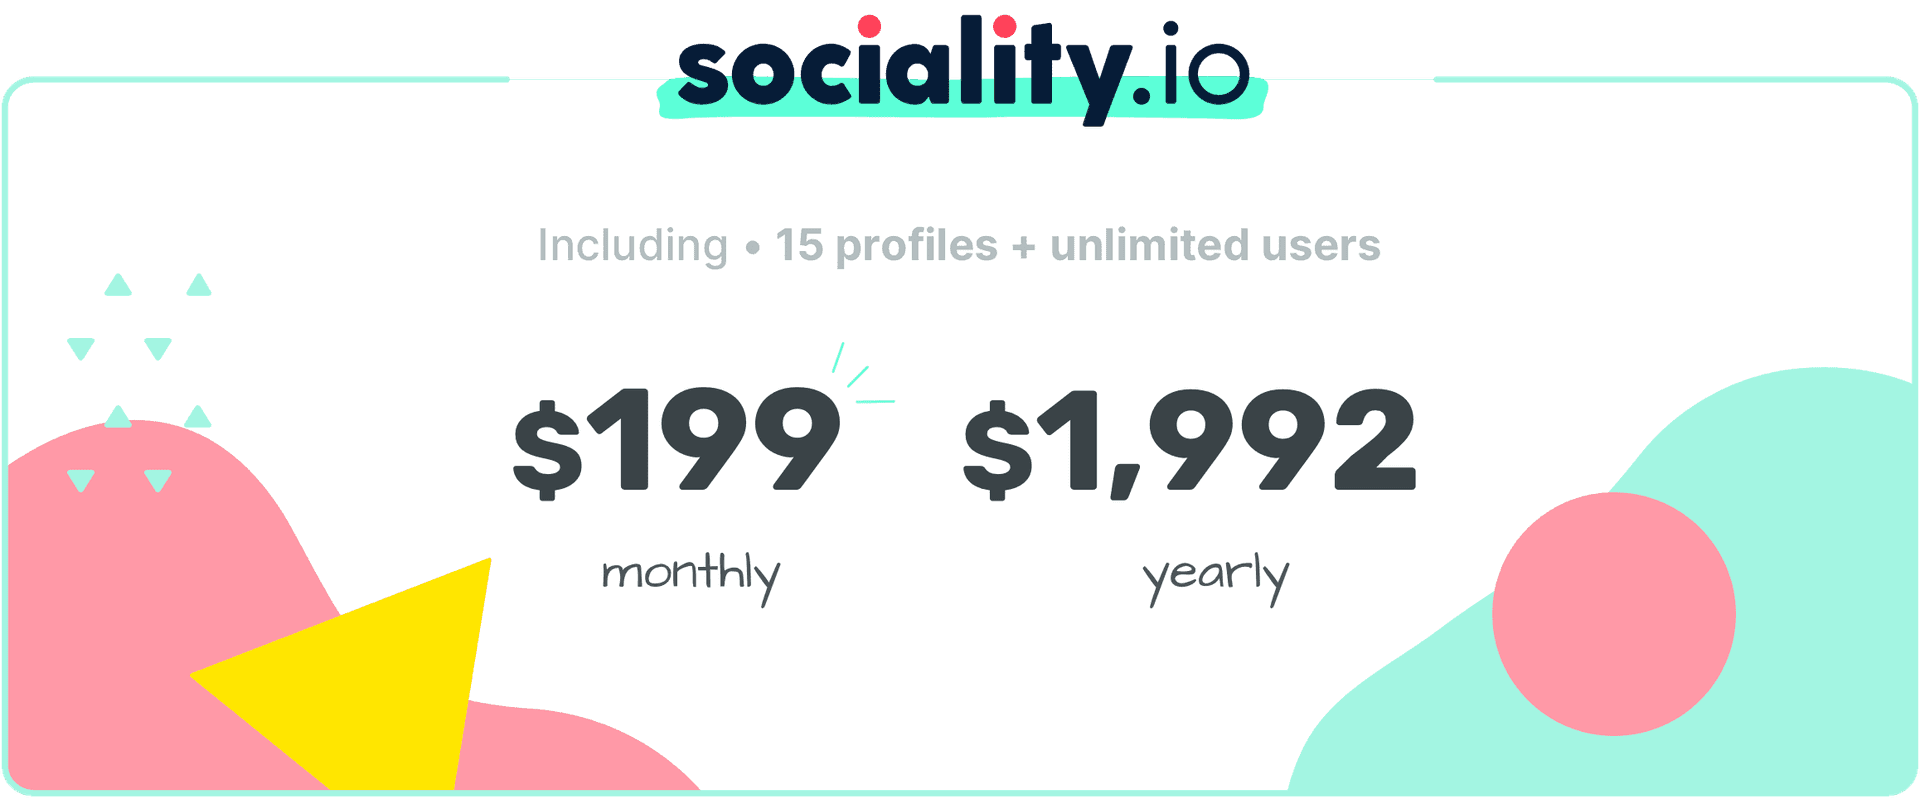 Social media management tools - Sociality.io pricing